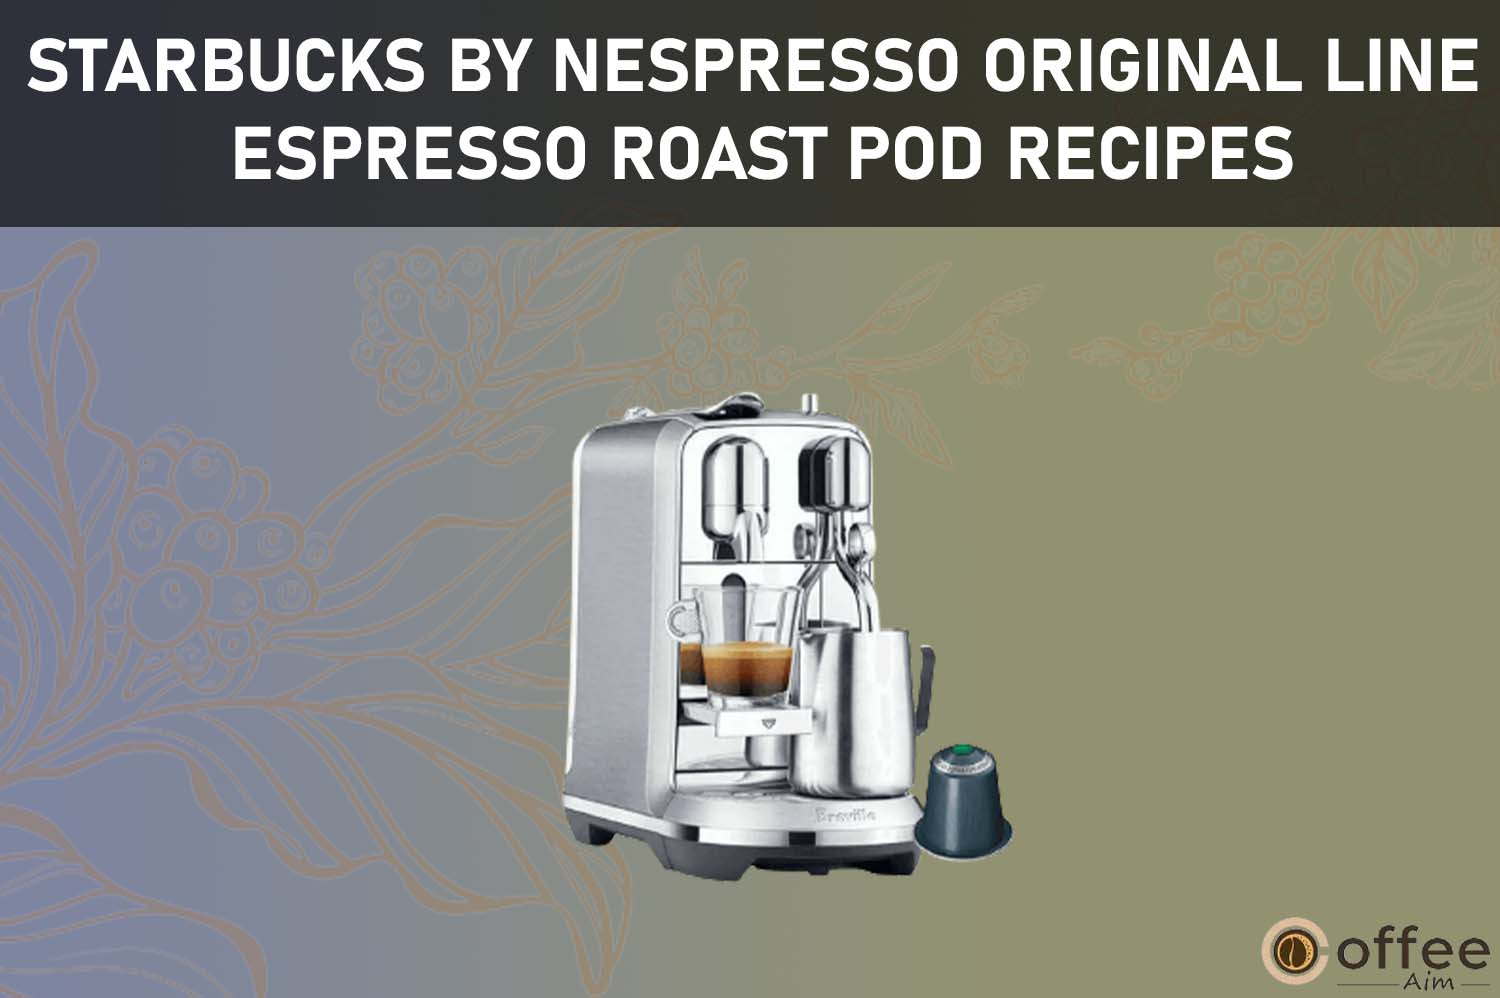 Featured image for the article "Starbucks by Nespresso Original Line Espresso Roast Pod Recipes"